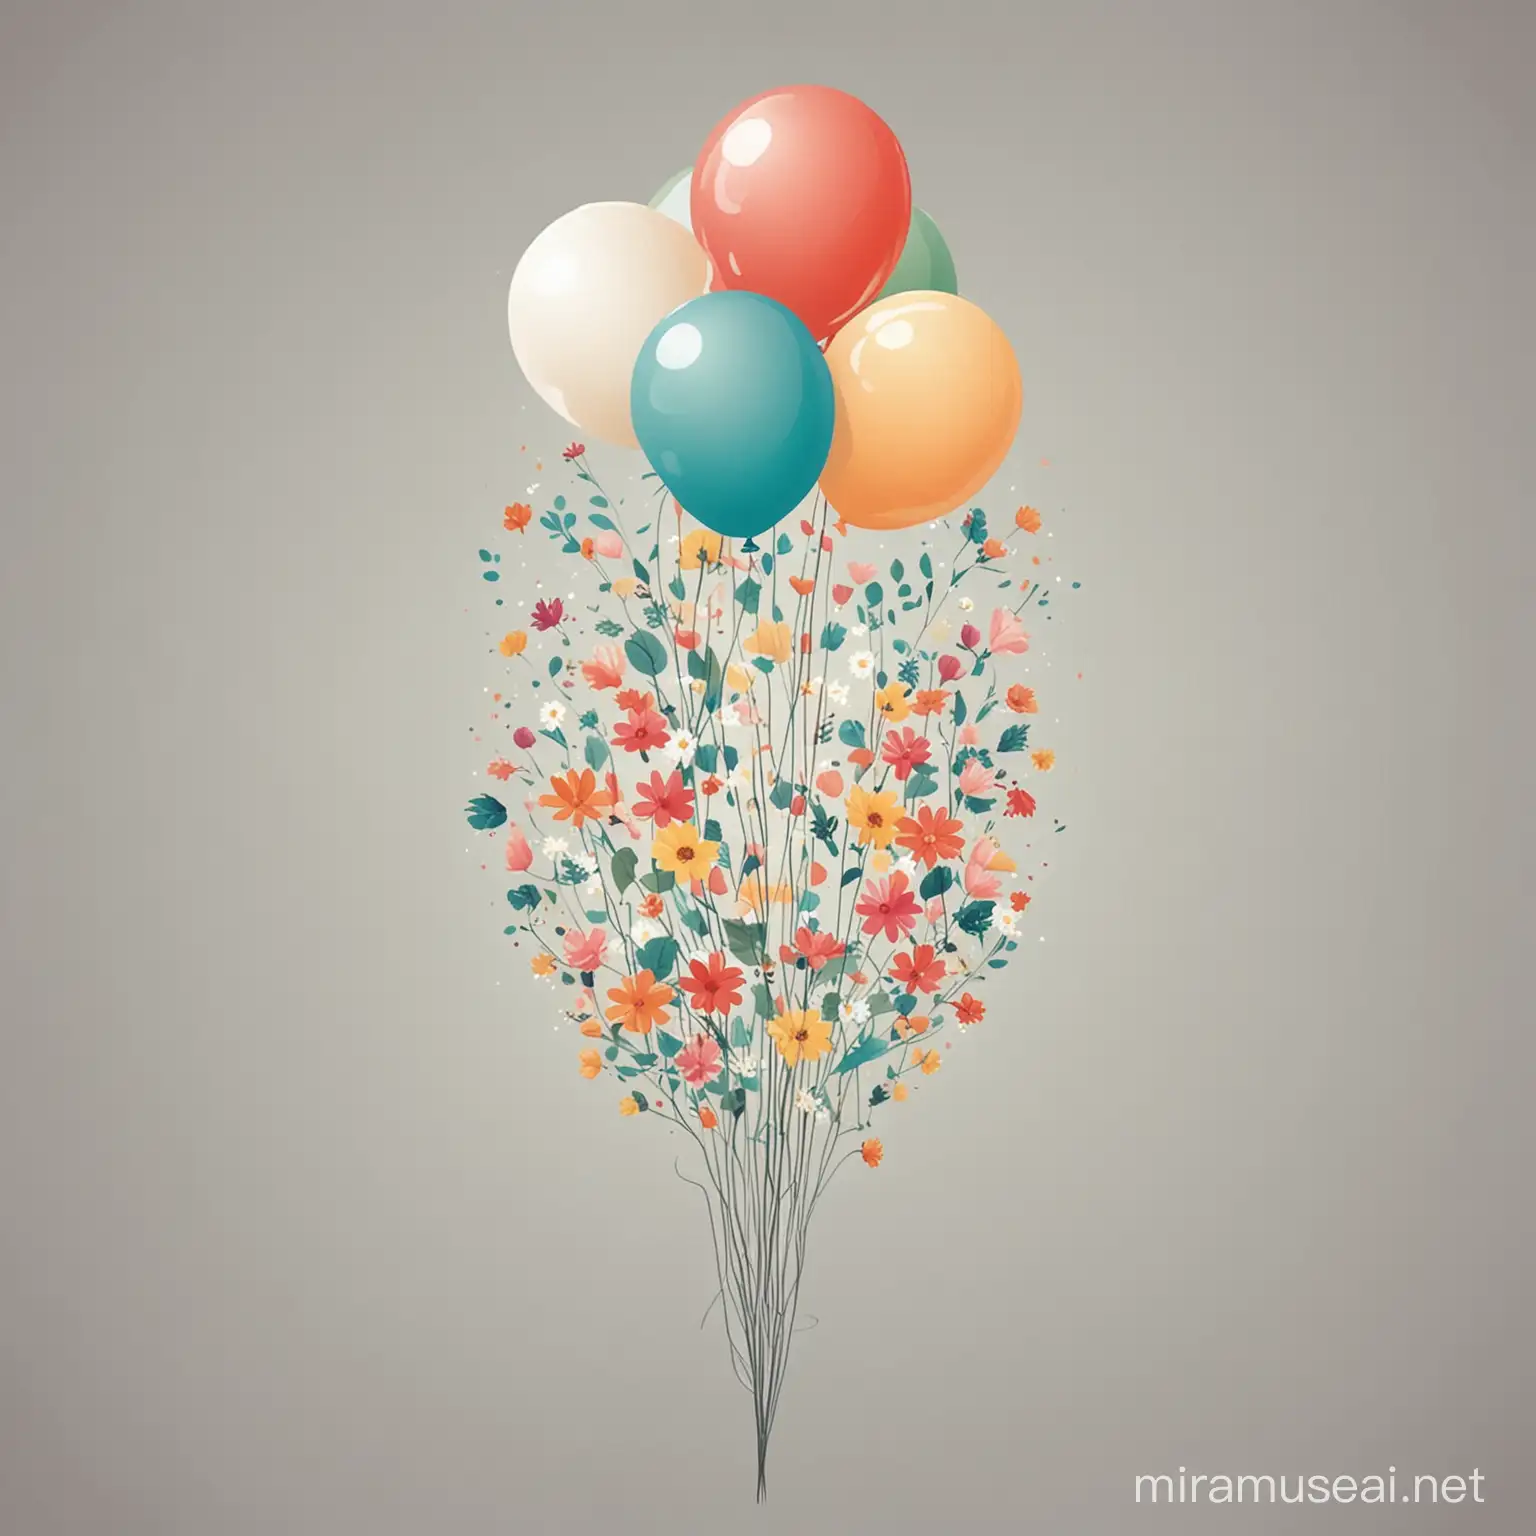 Minimalist Vector Illustration of Flowers and Balloons